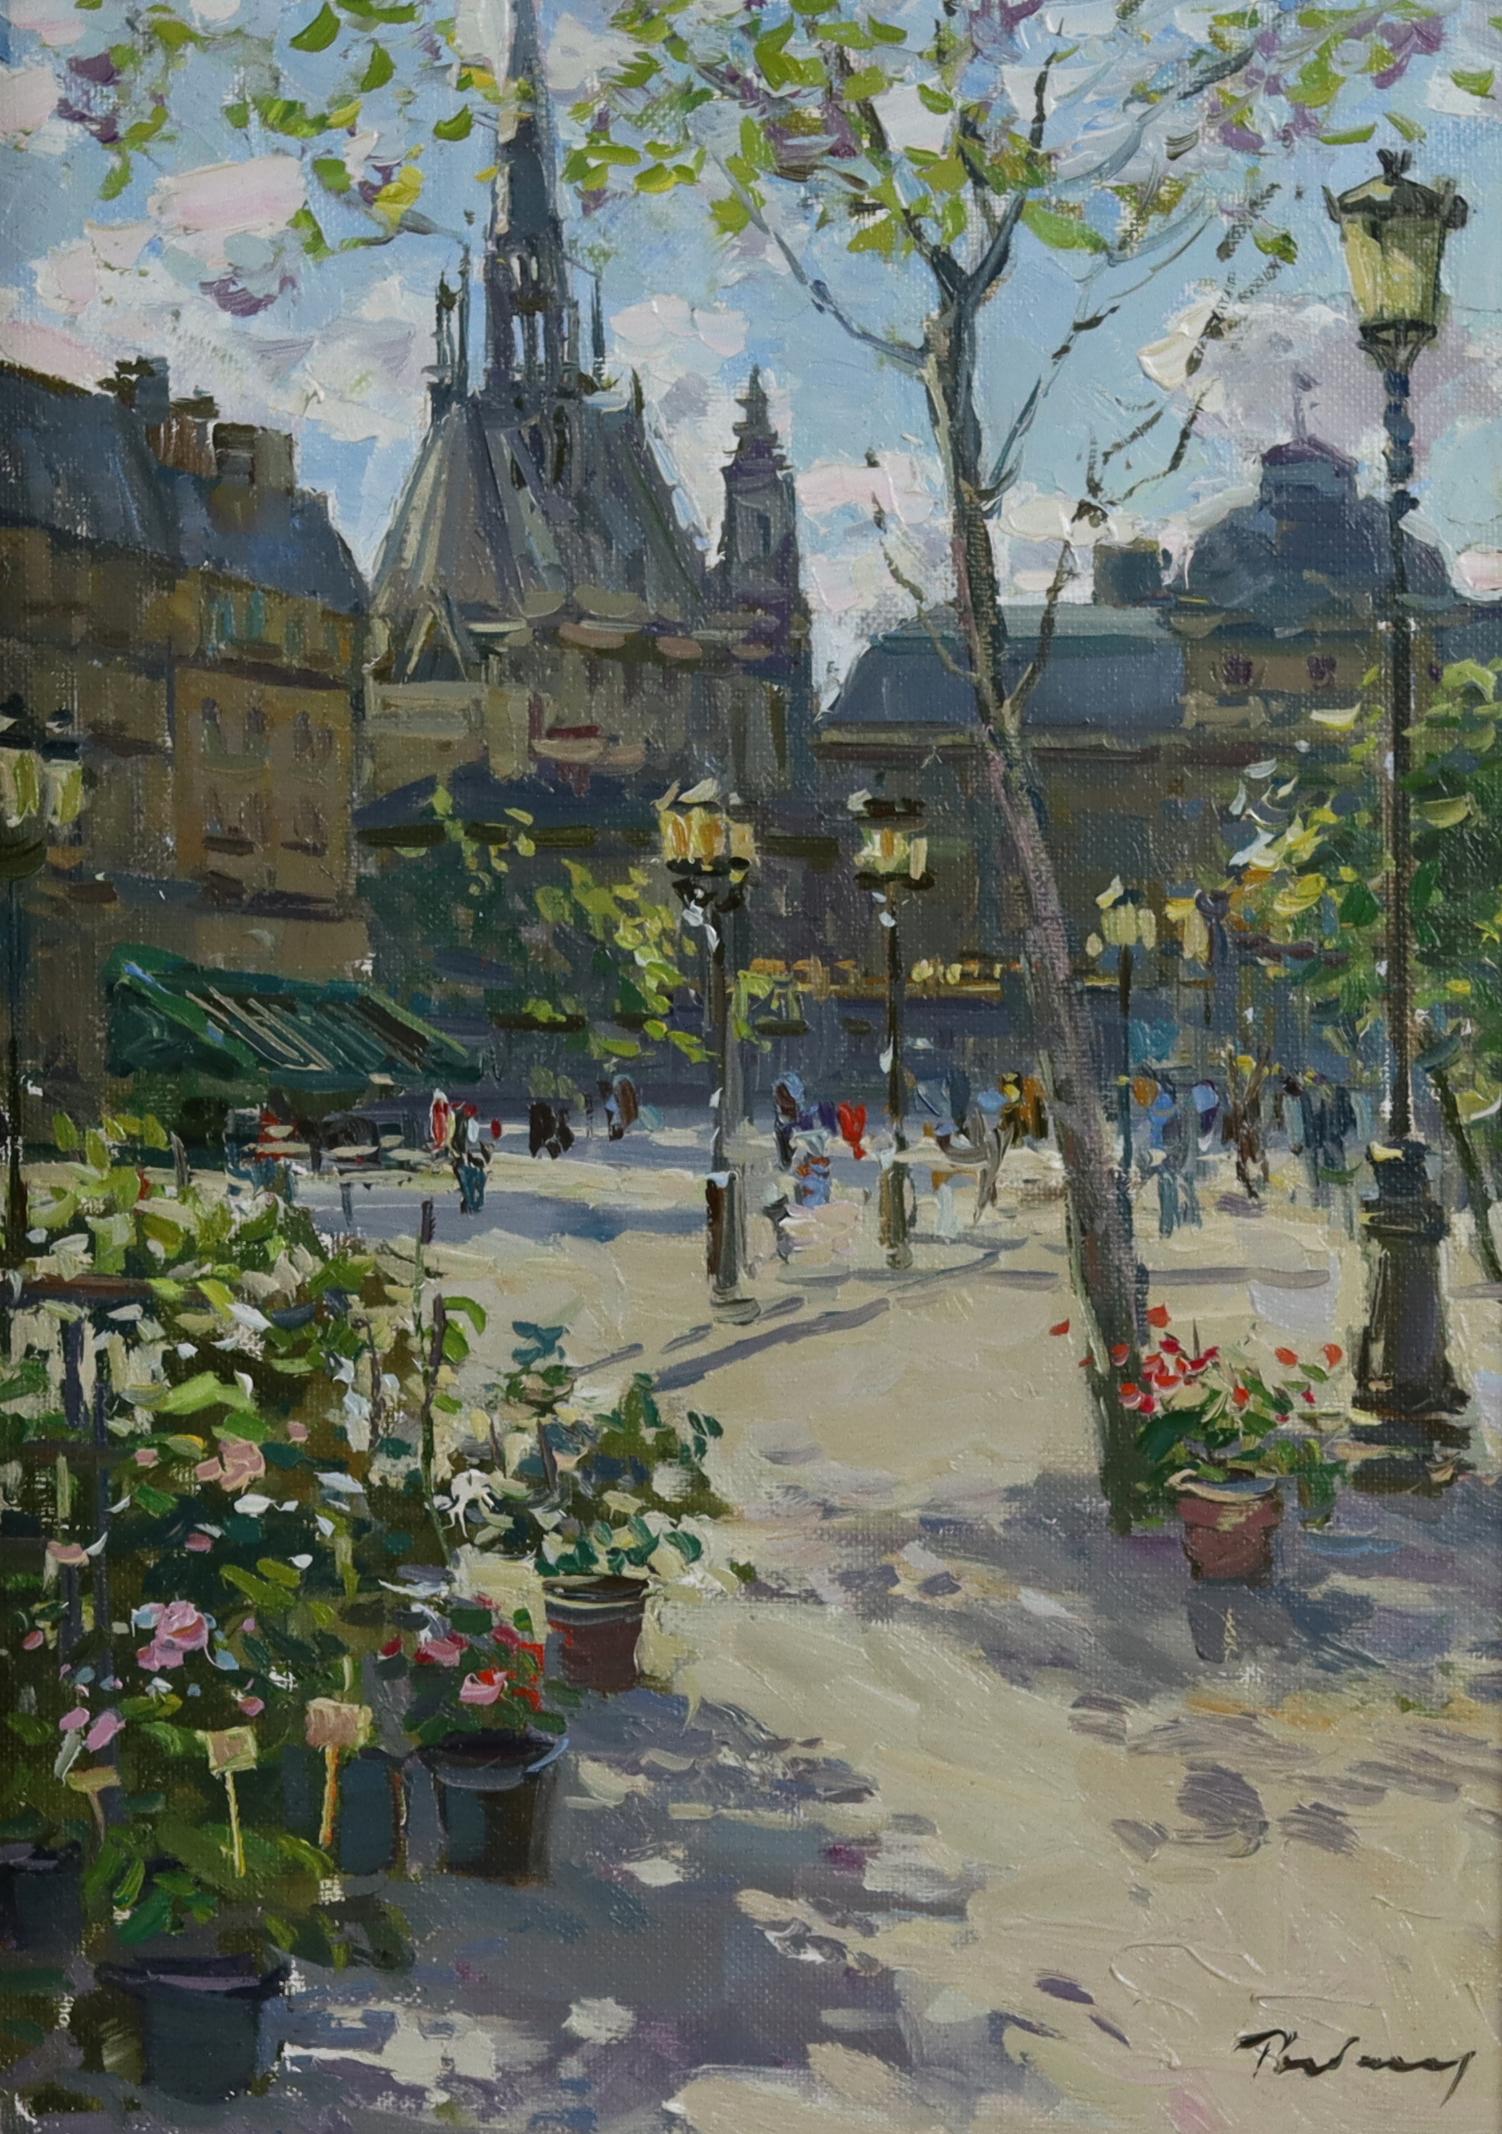 A Street Market in Place de la Cite, Paris - Painting by Irina Ribakova